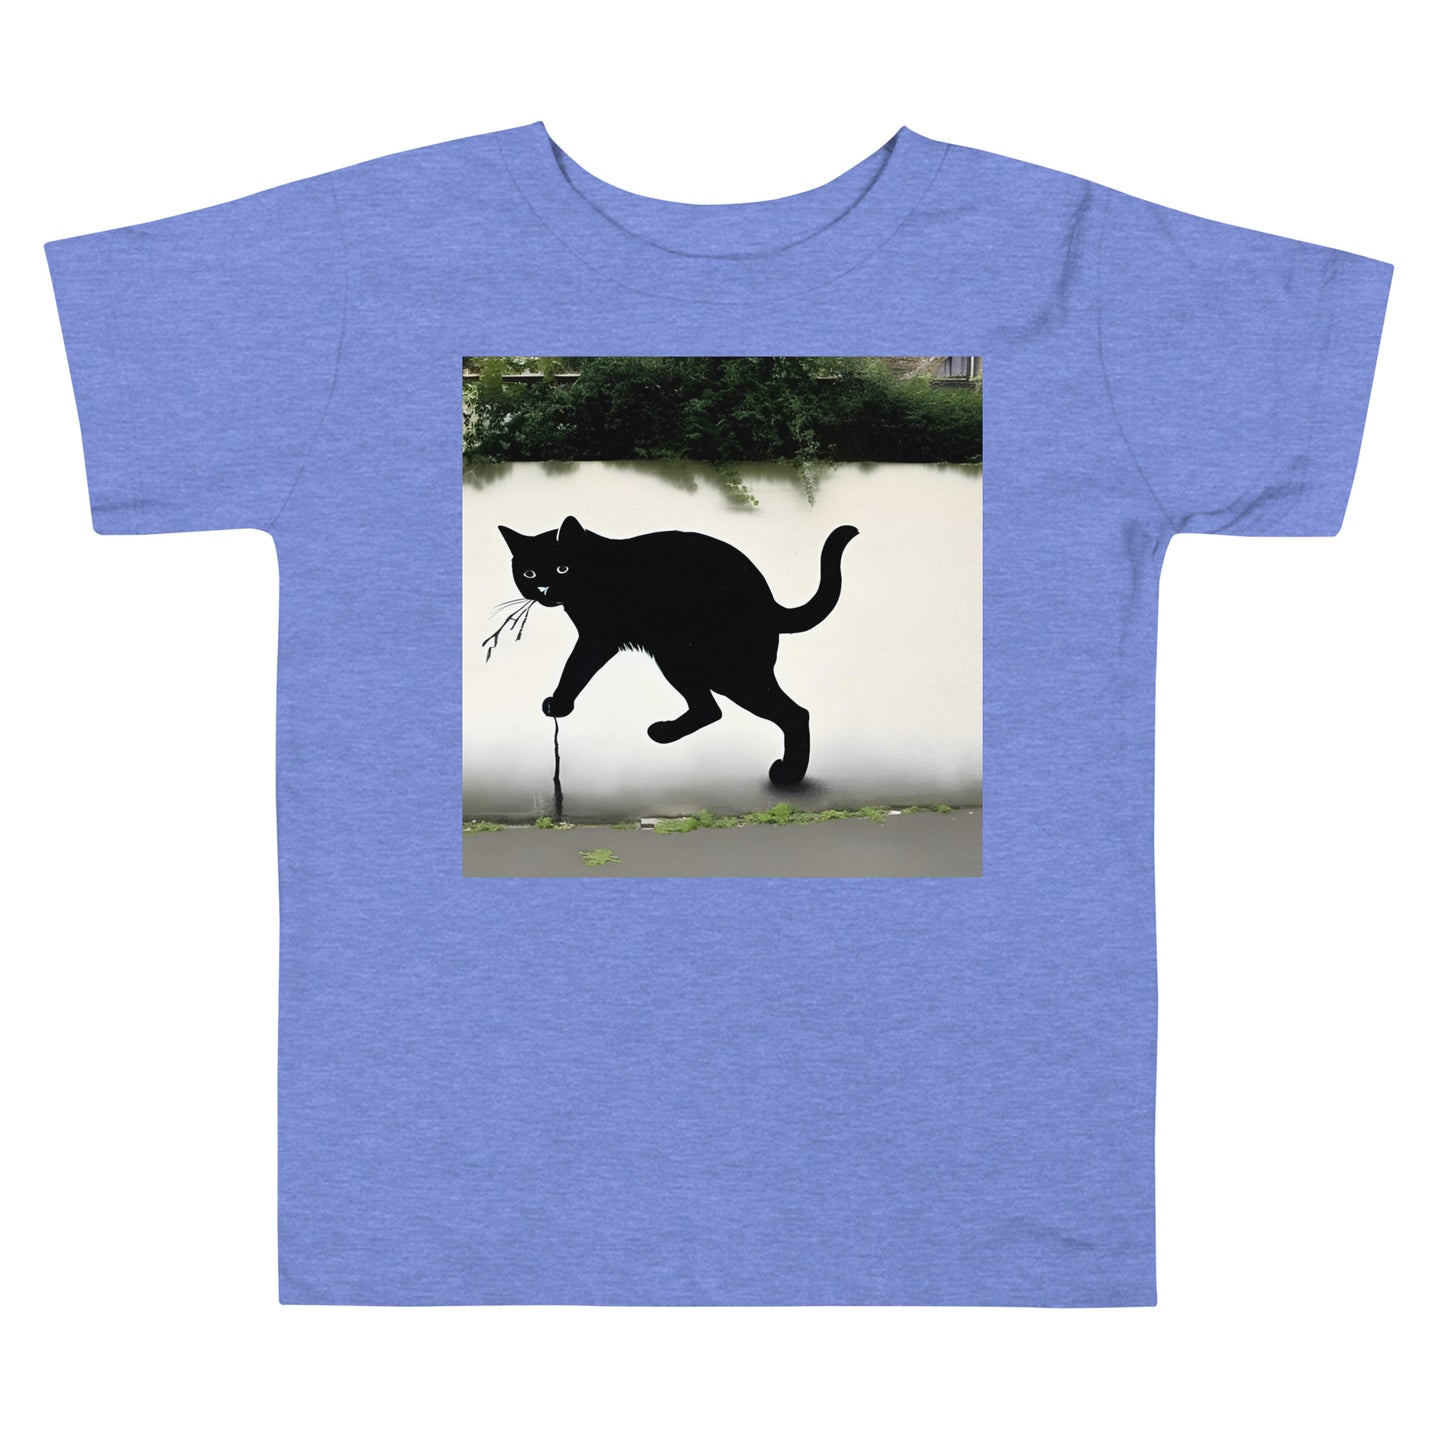 Purradise Toddler's T-Shirt - 049